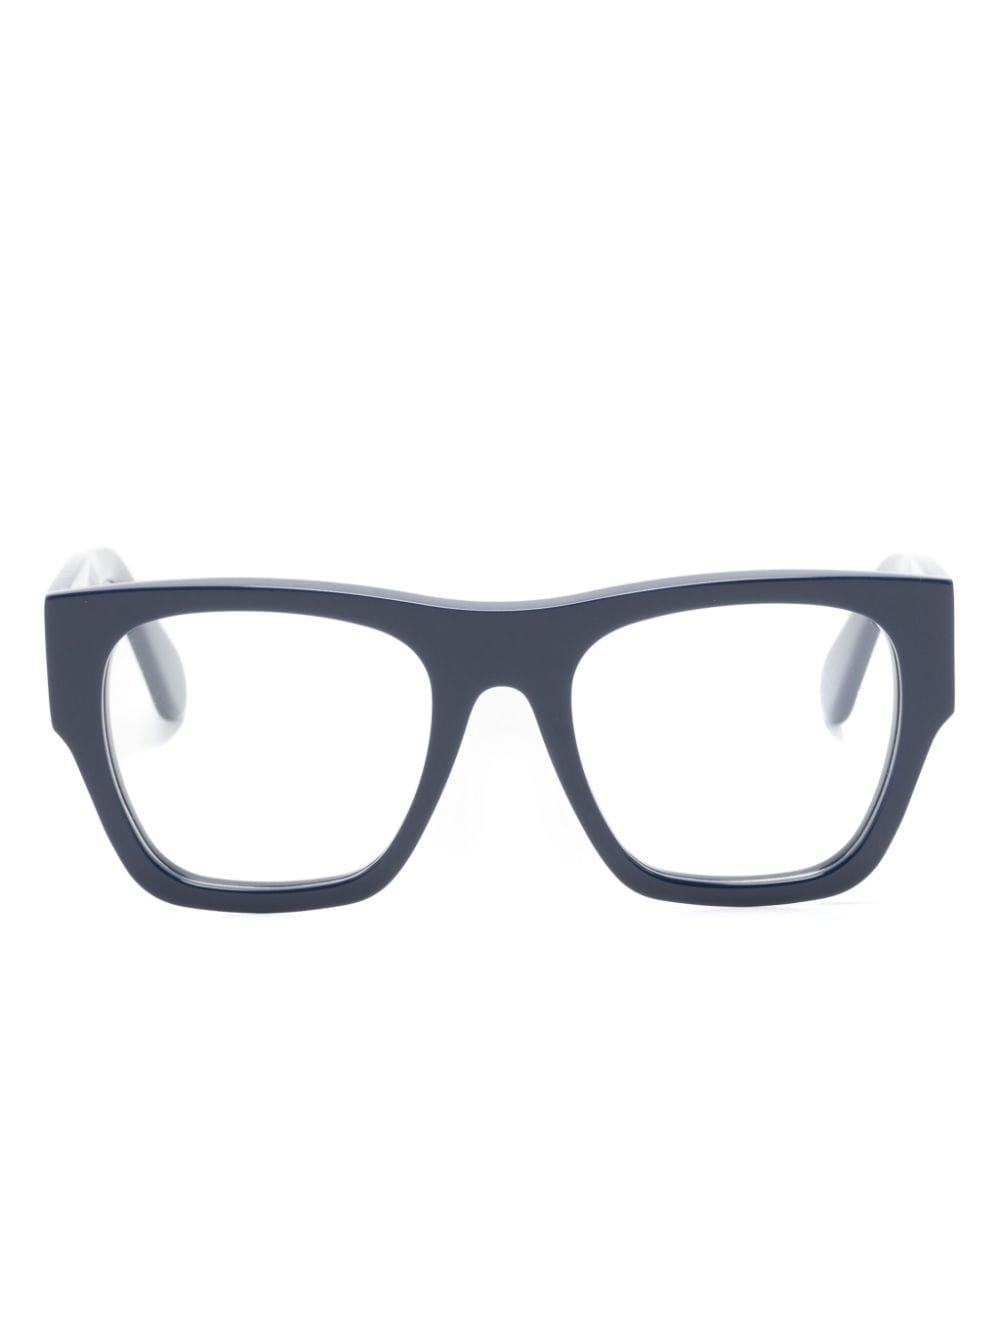 Chloé Eyewear Brille mit eckigem Gestell - Blau von Chloé Eyewear